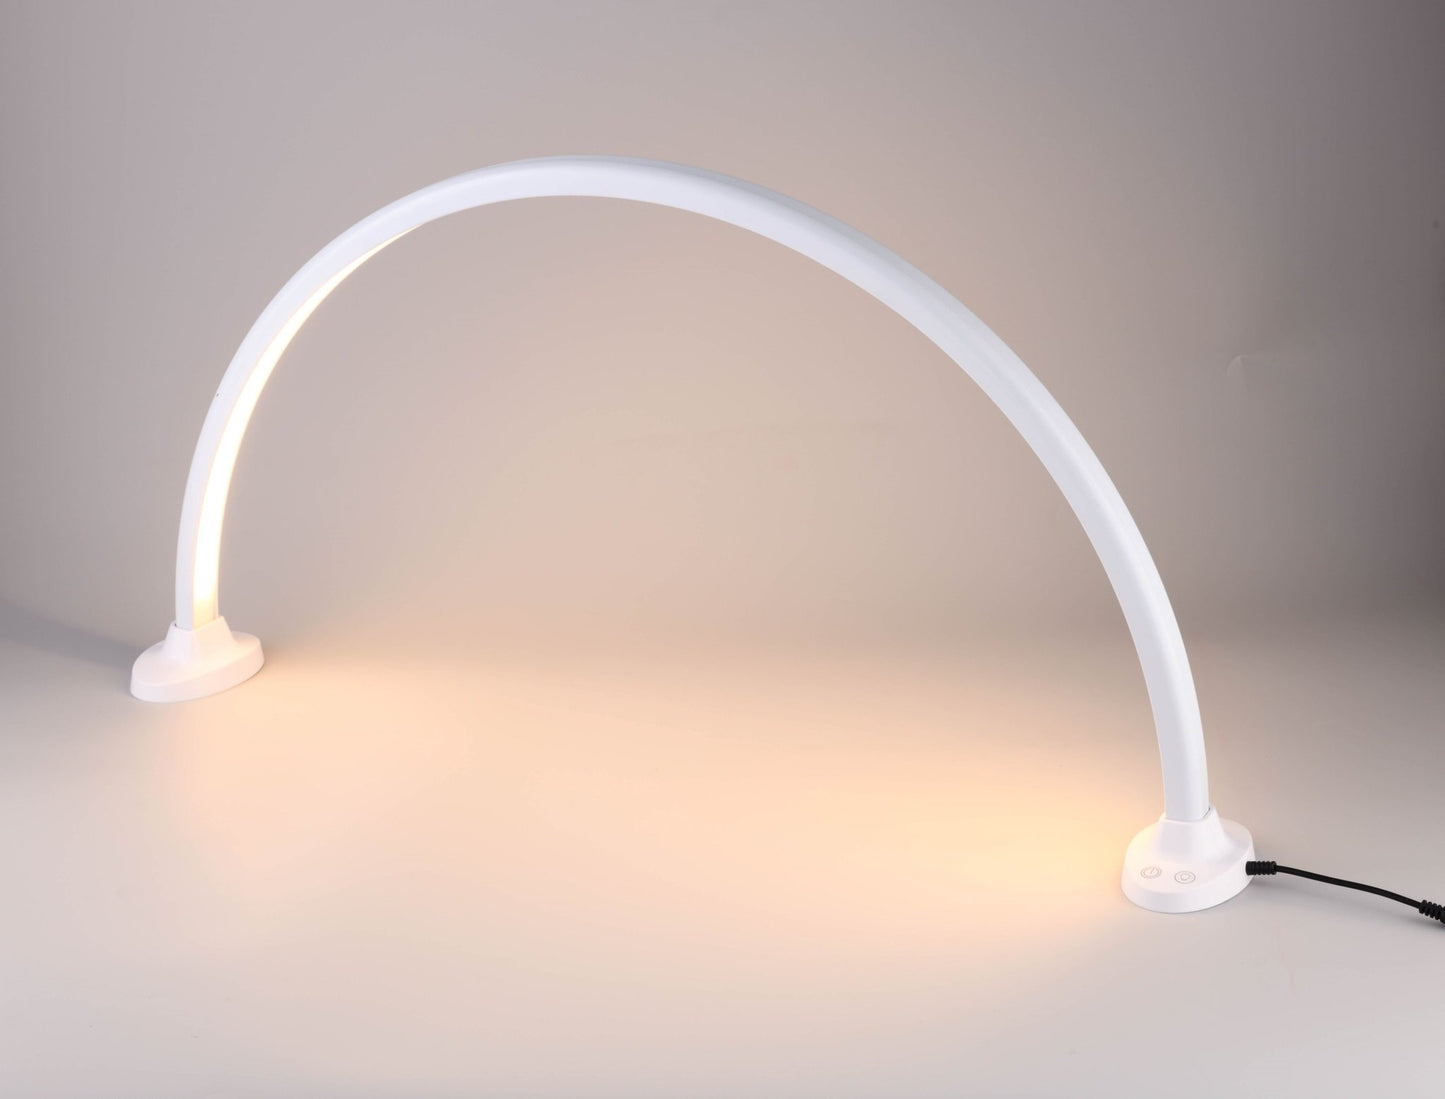 Adventek LED Table Lamp - Arch - W.S. Industries, Inc.